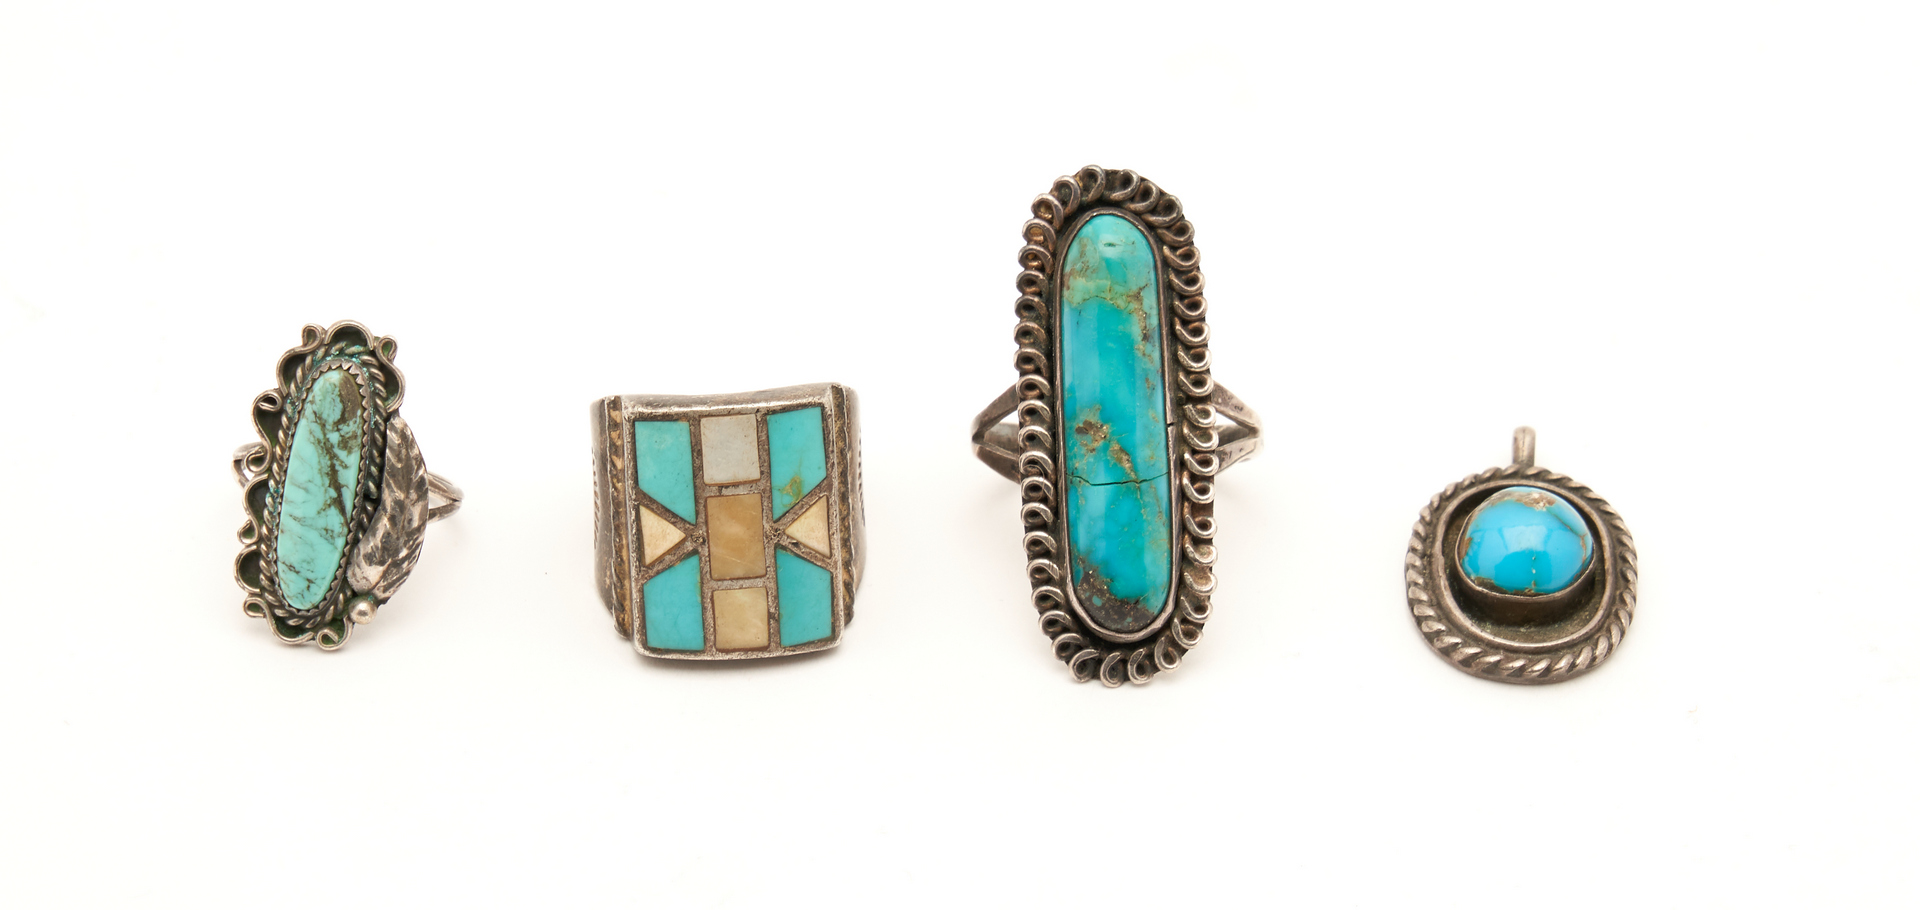 Lot 613: 32 Native American Jewelry Items